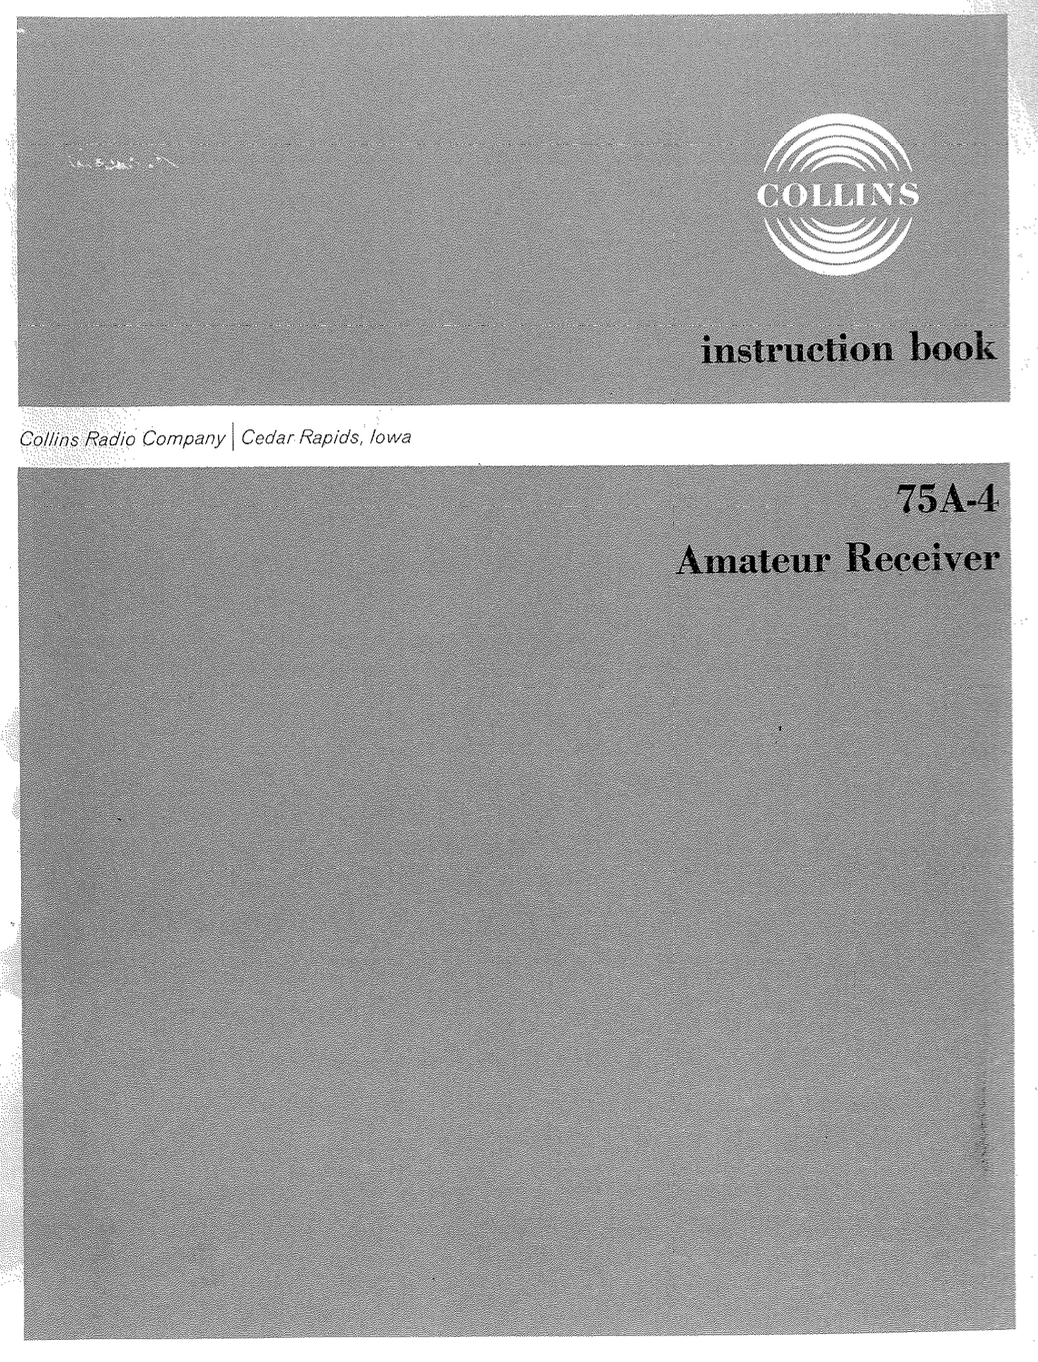 Collins 75A-4 Amateur Band Receiver - Instruction Manual - 1968-11)